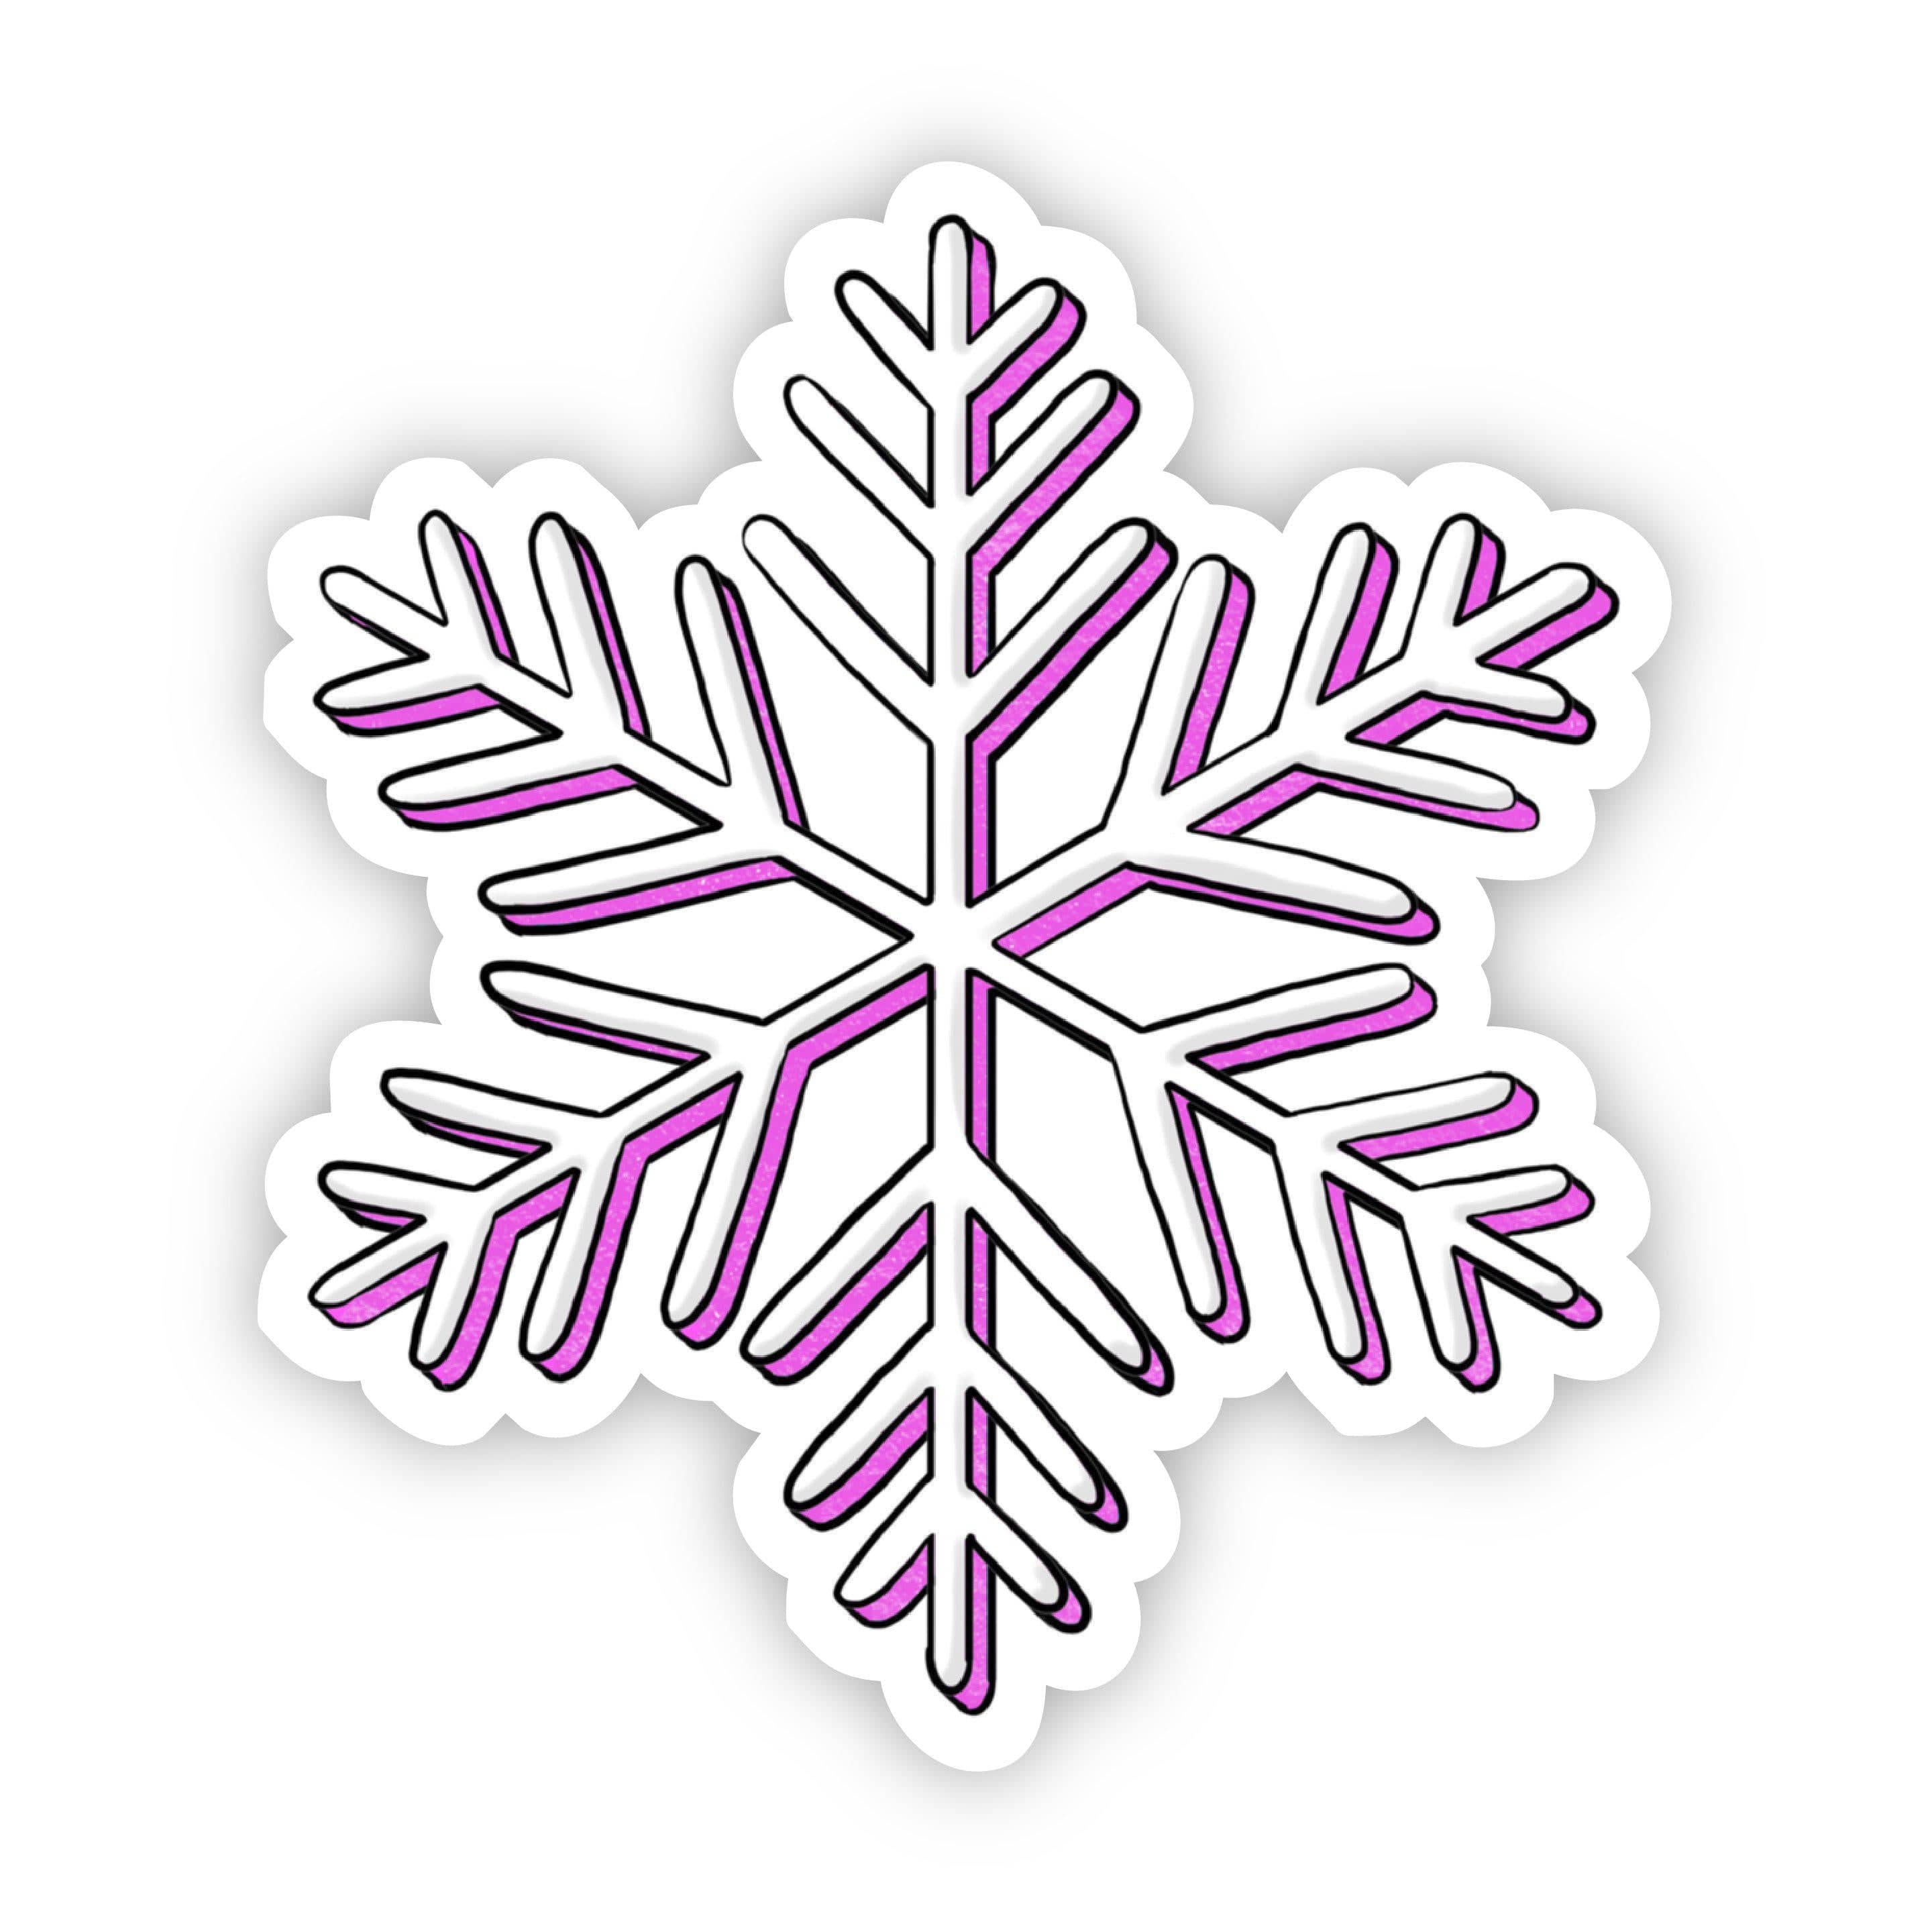 Snowflake Stickers Snow Stickers Winter Stickers Snowflakes